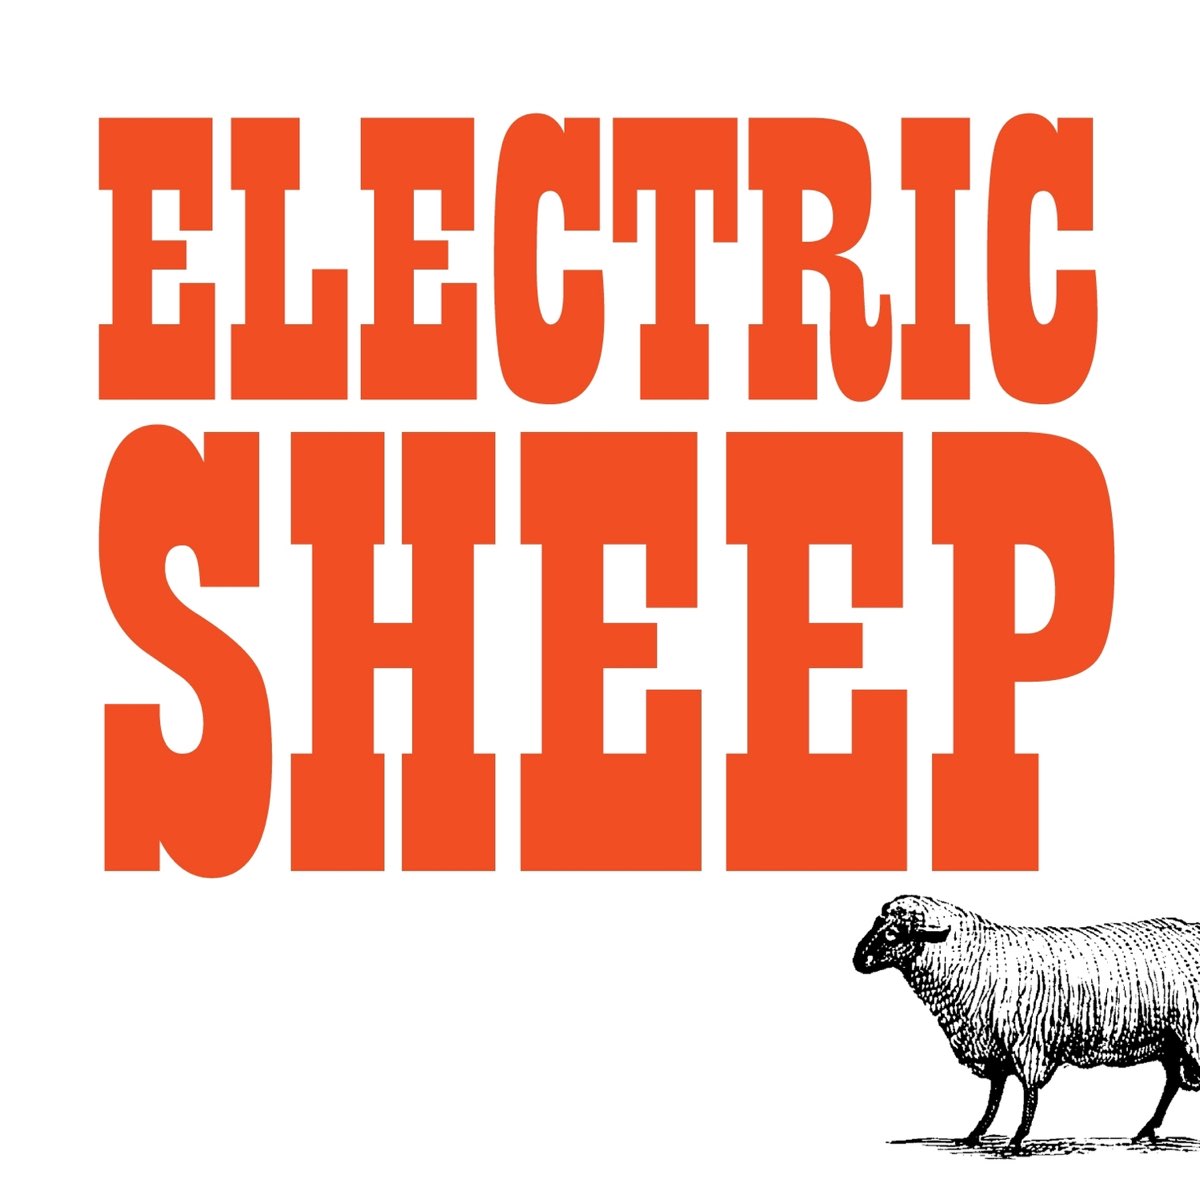 Electric sheep cheat